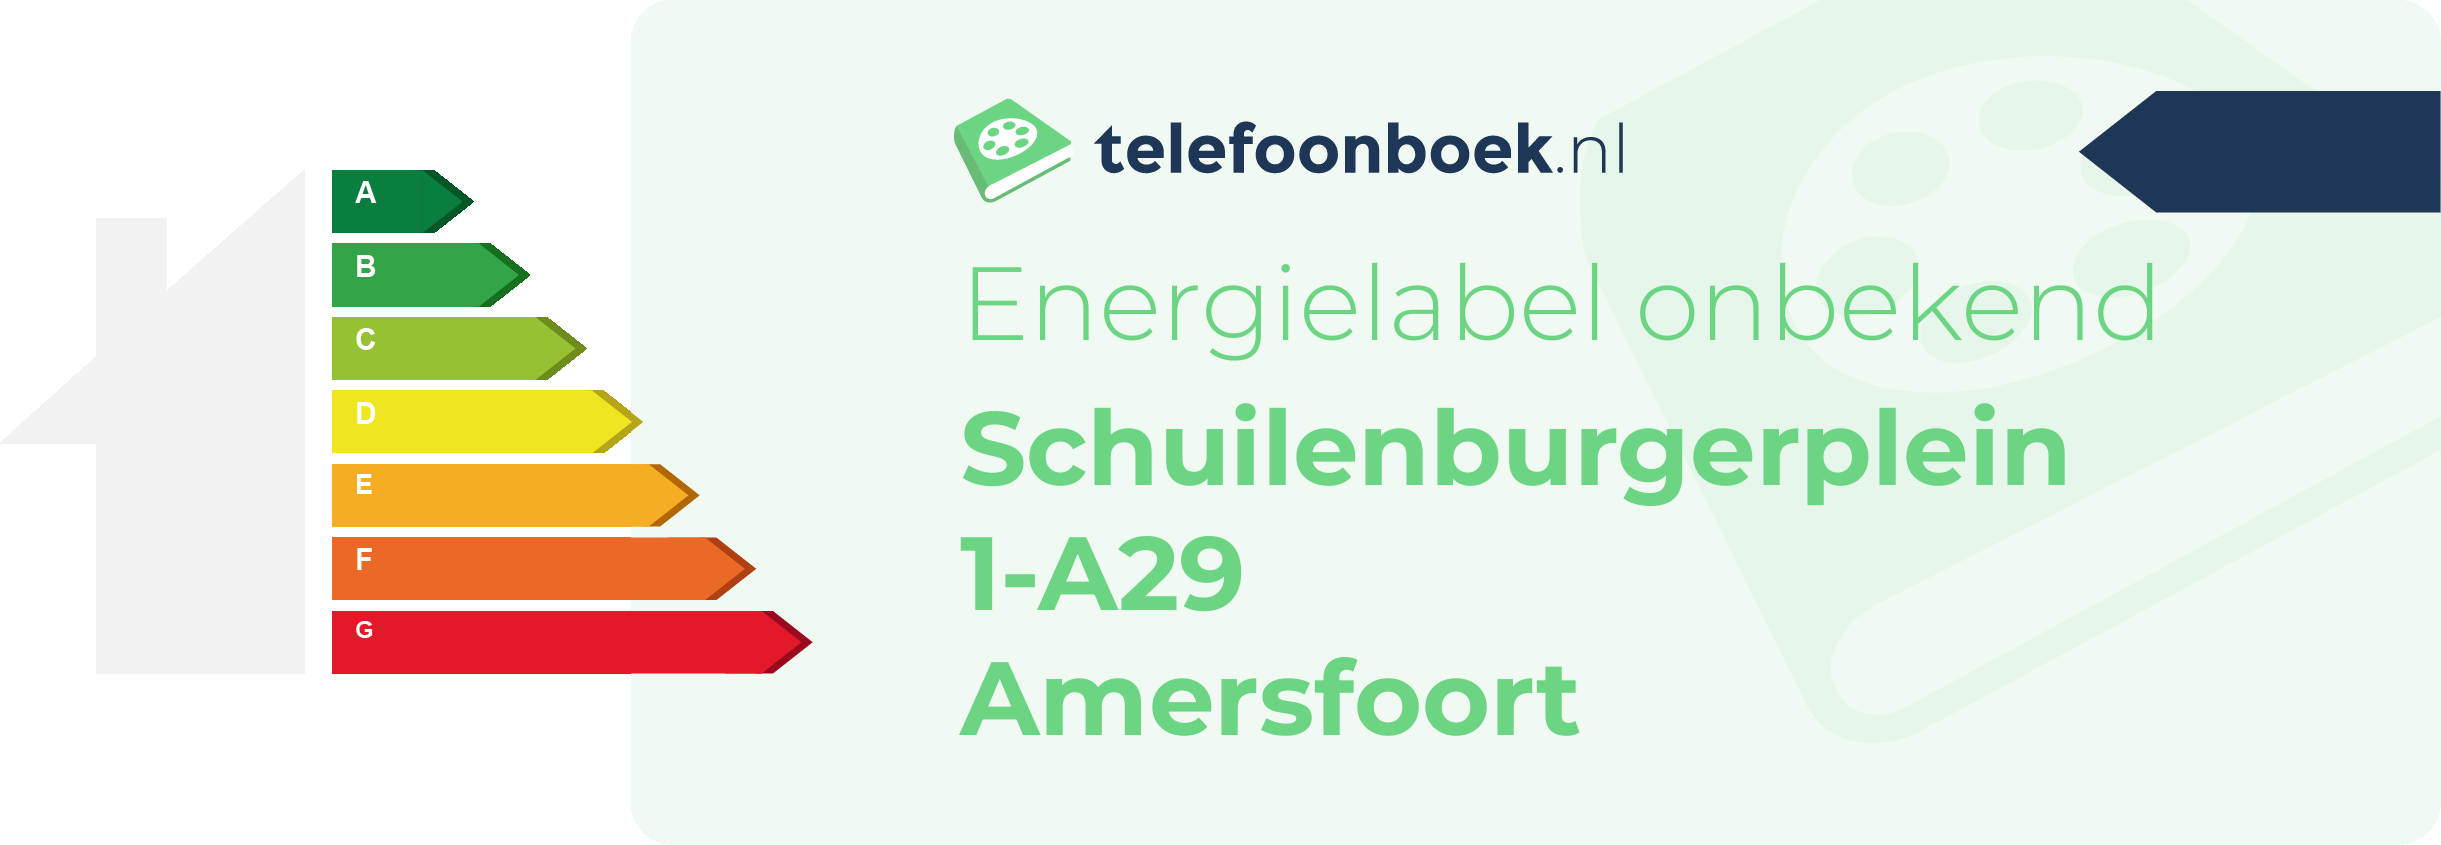 Energielabel Schuilenburgerplein 1-A29 Amersfoort